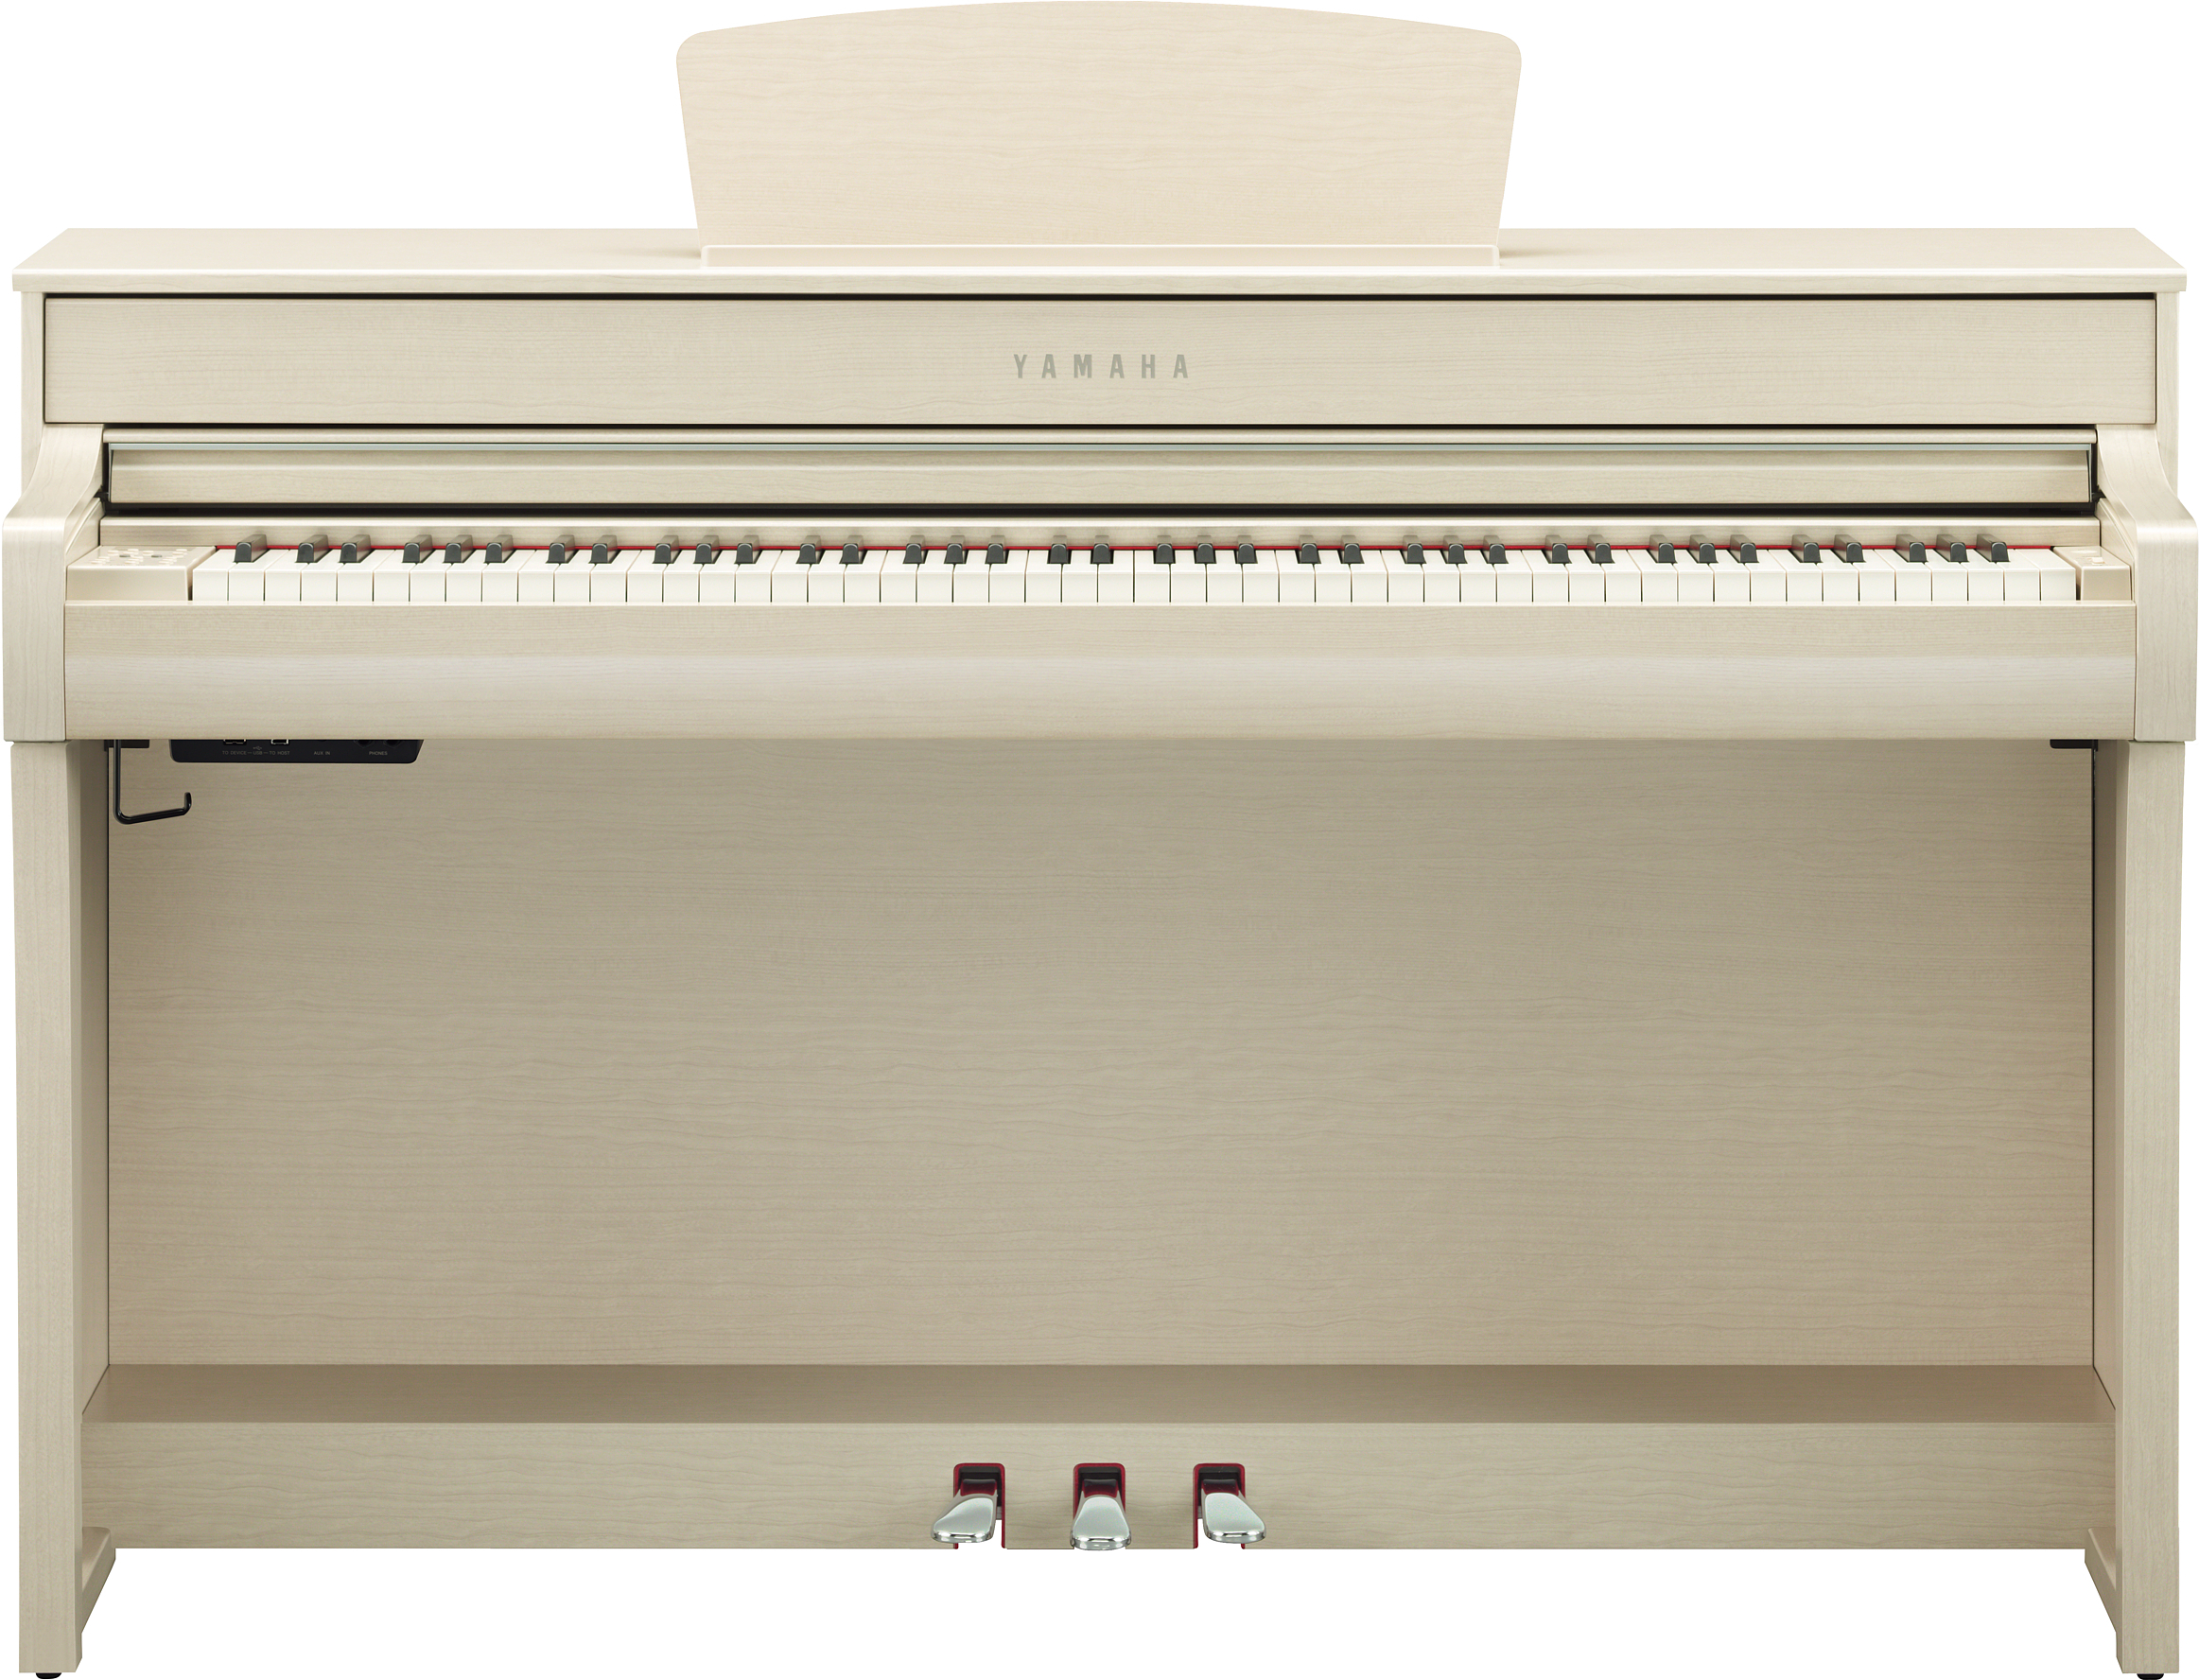 Yamaha Clp735wa - Digital piano with stand - Main picture